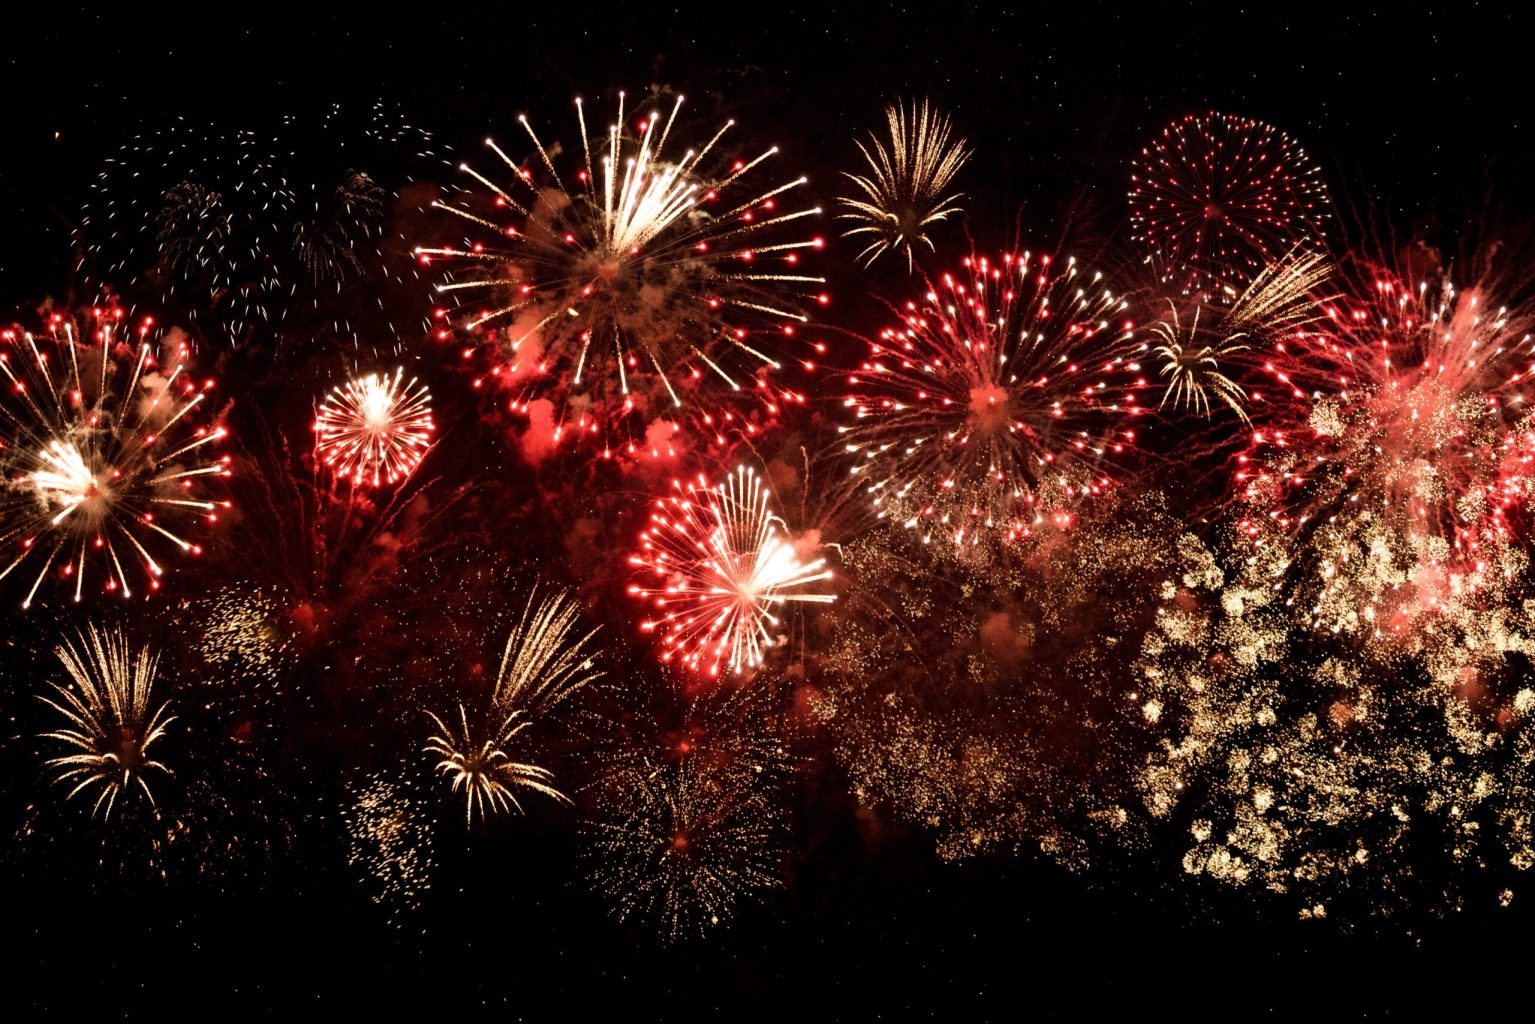 fireworks-in-the-night-sky-GHG213